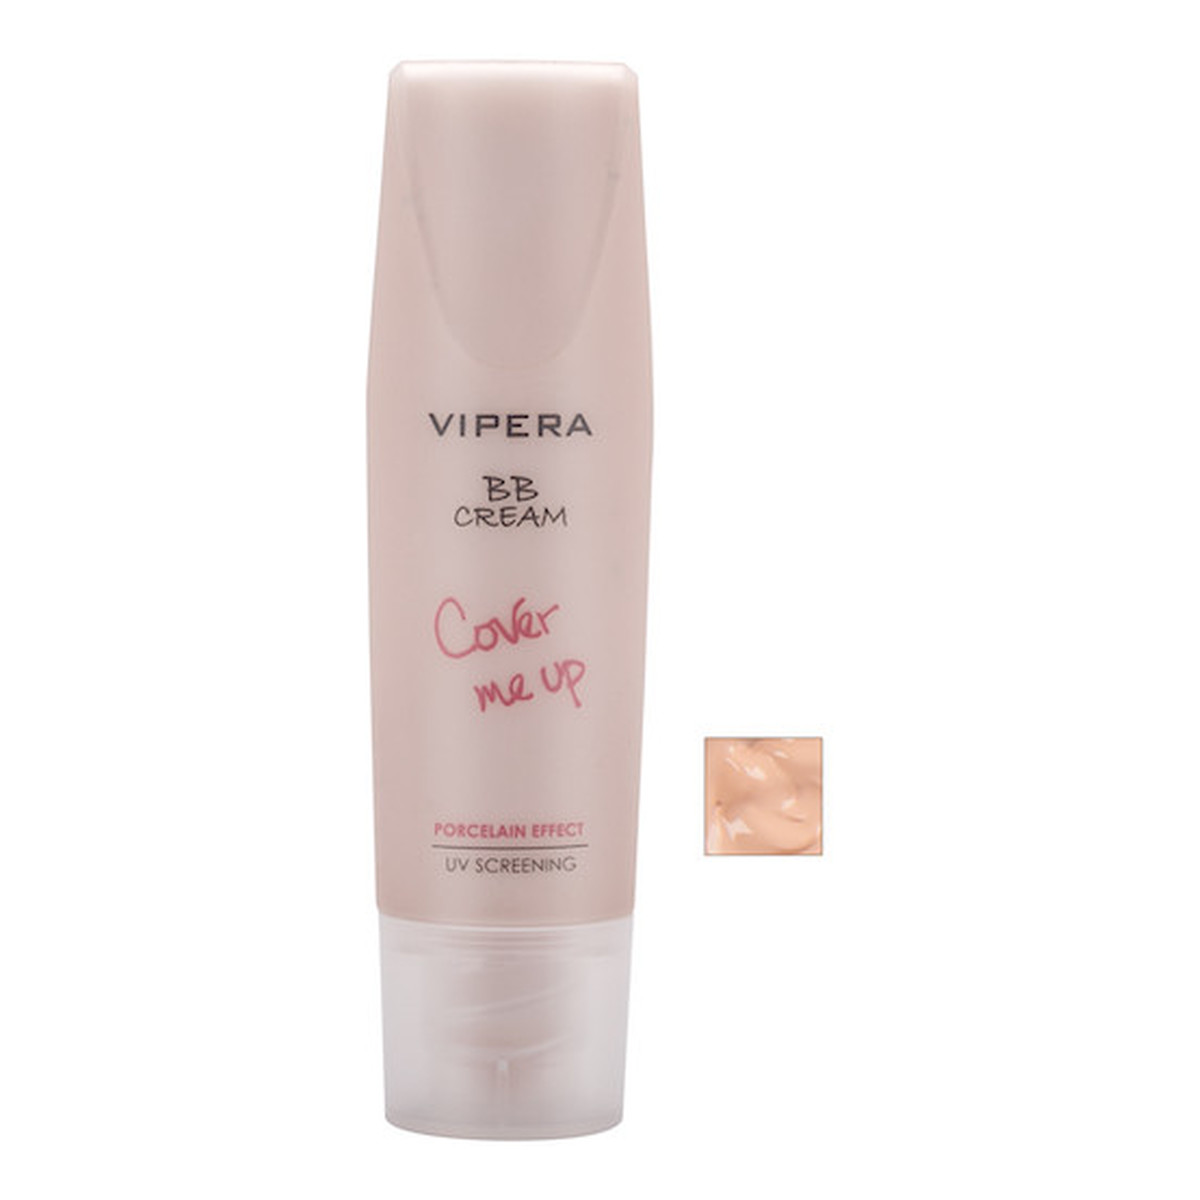 Vipera Cover Me Up kryjący krem BB z filtrem UV 35ml